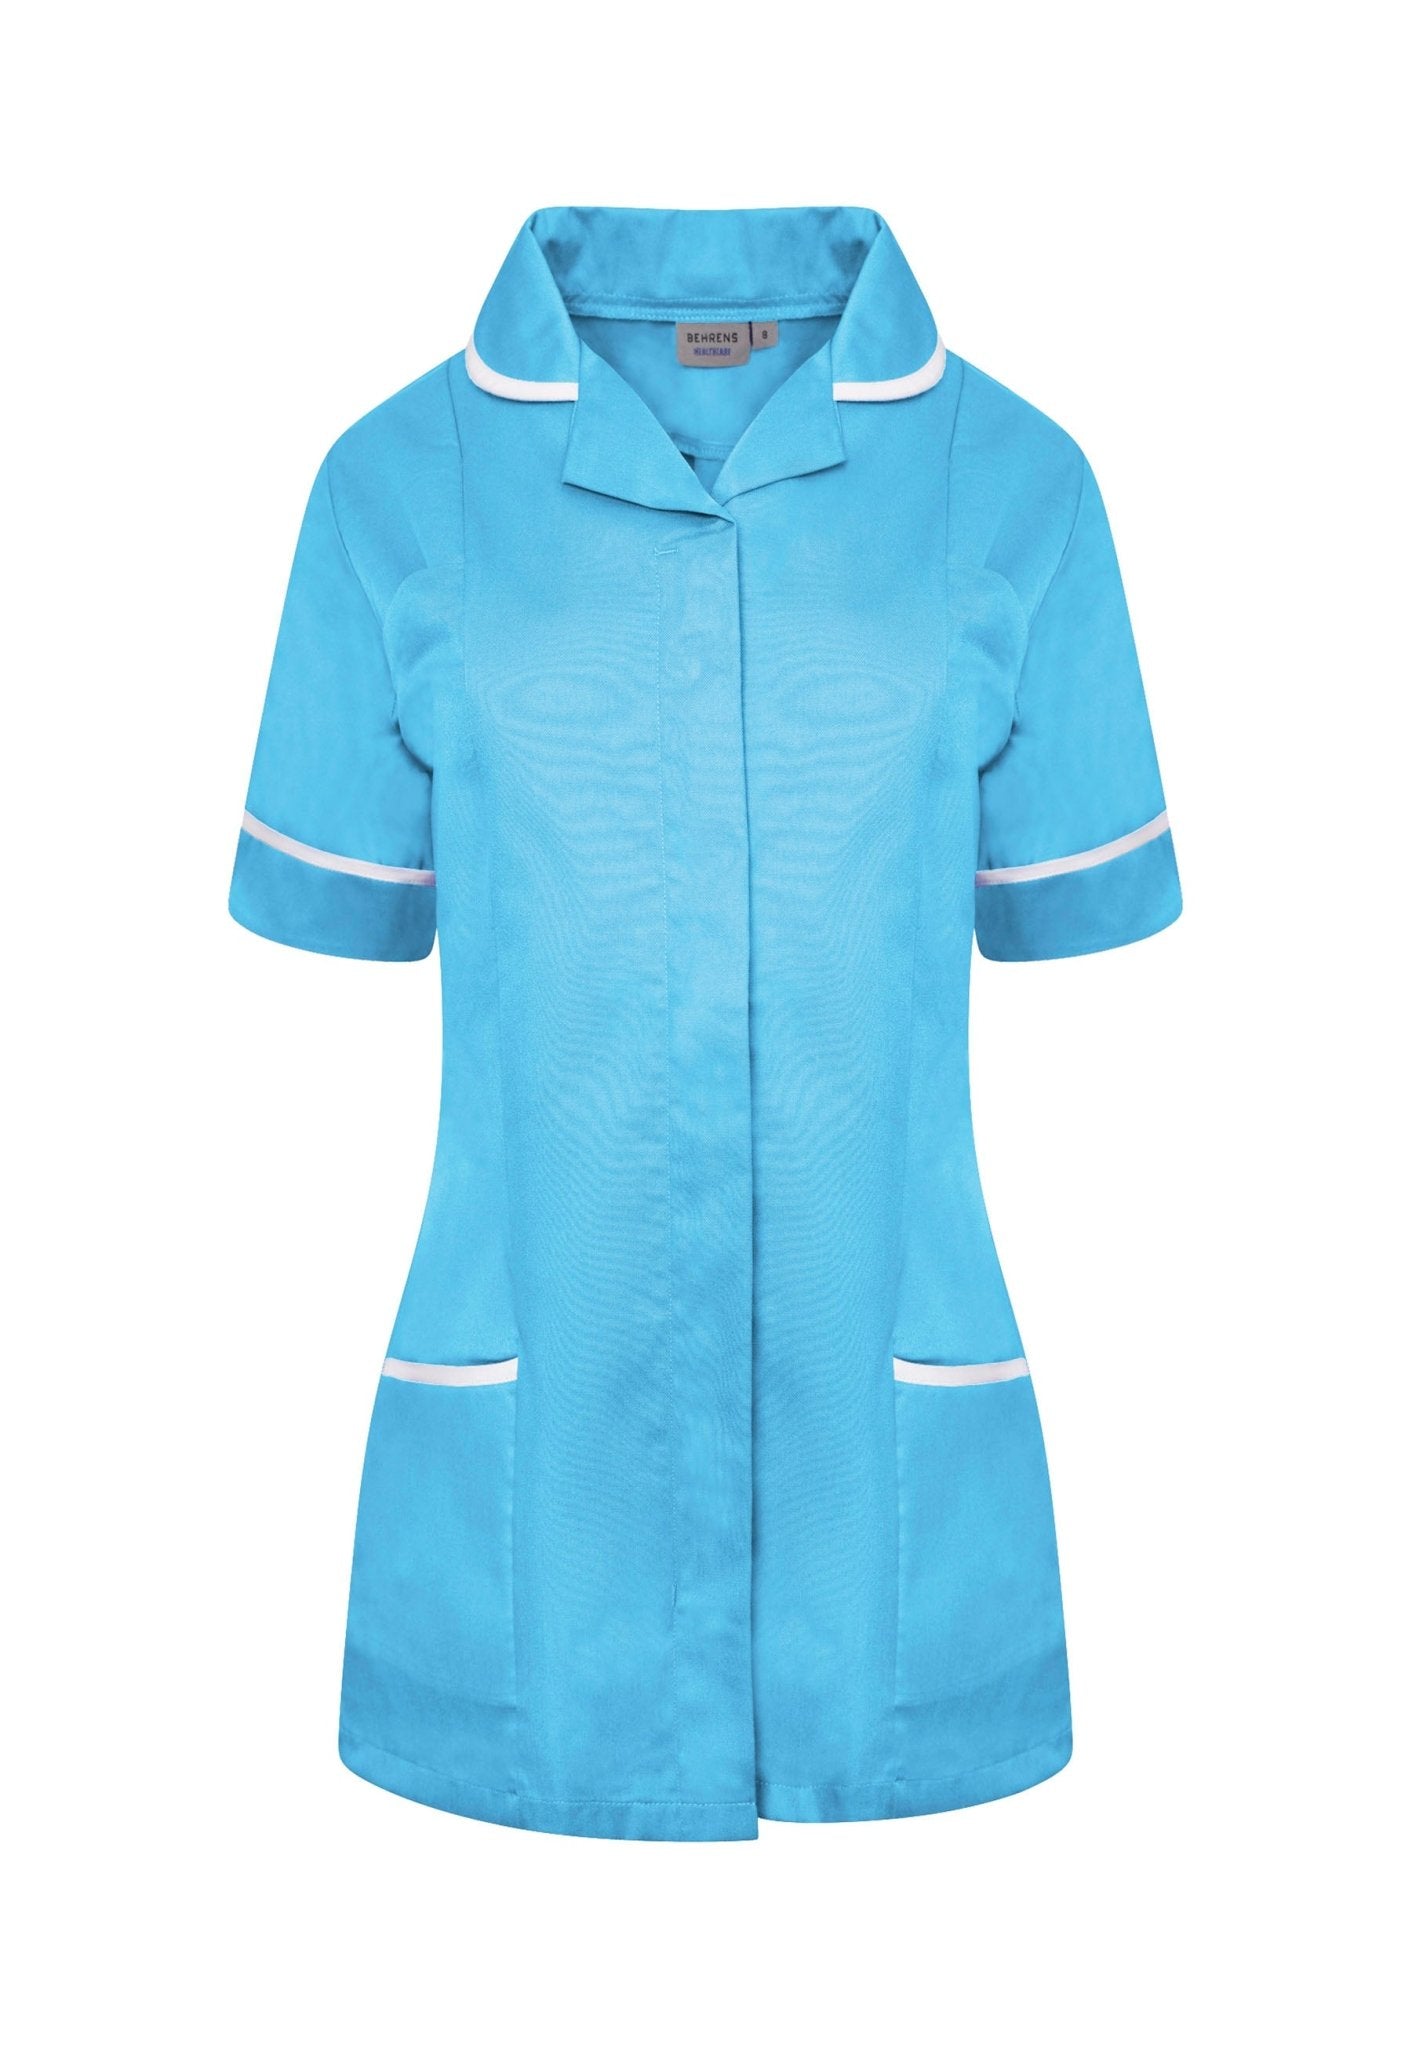 Women's Healthcare Nurses Tunic - The Work Uniform Company